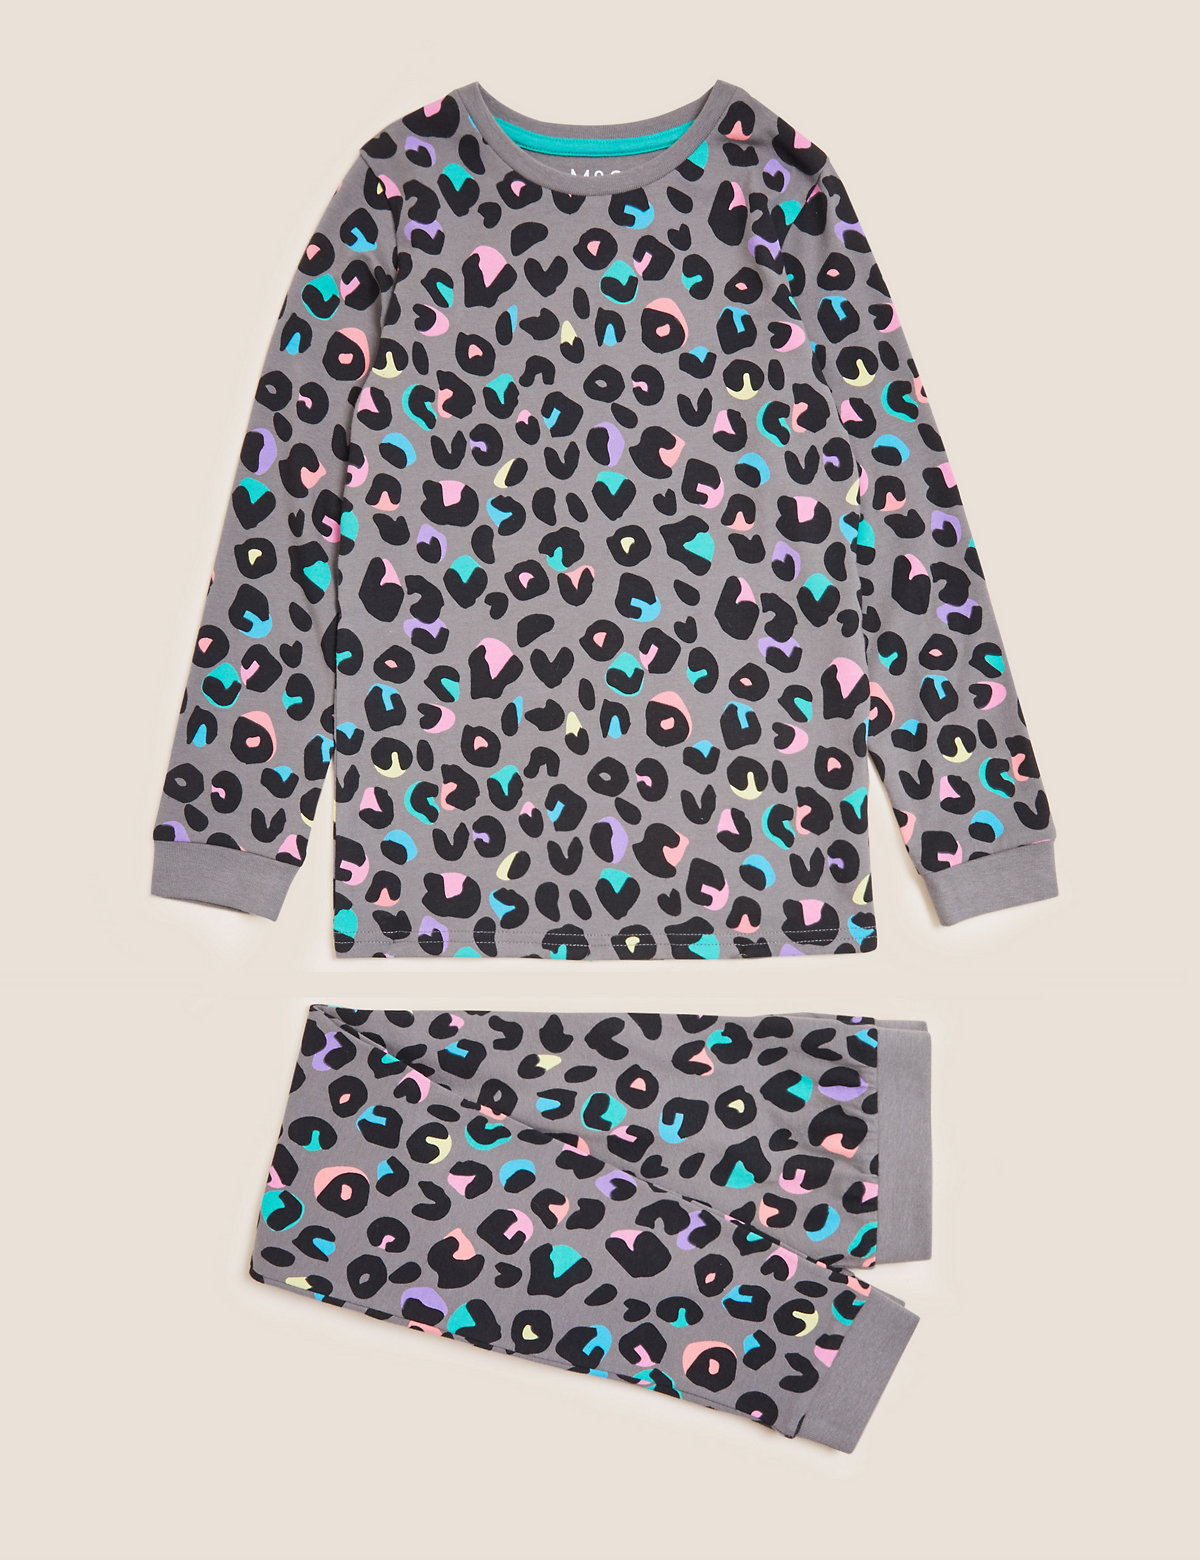 Cotton Rich Leopard Pyjamas (7-16 Yrs)